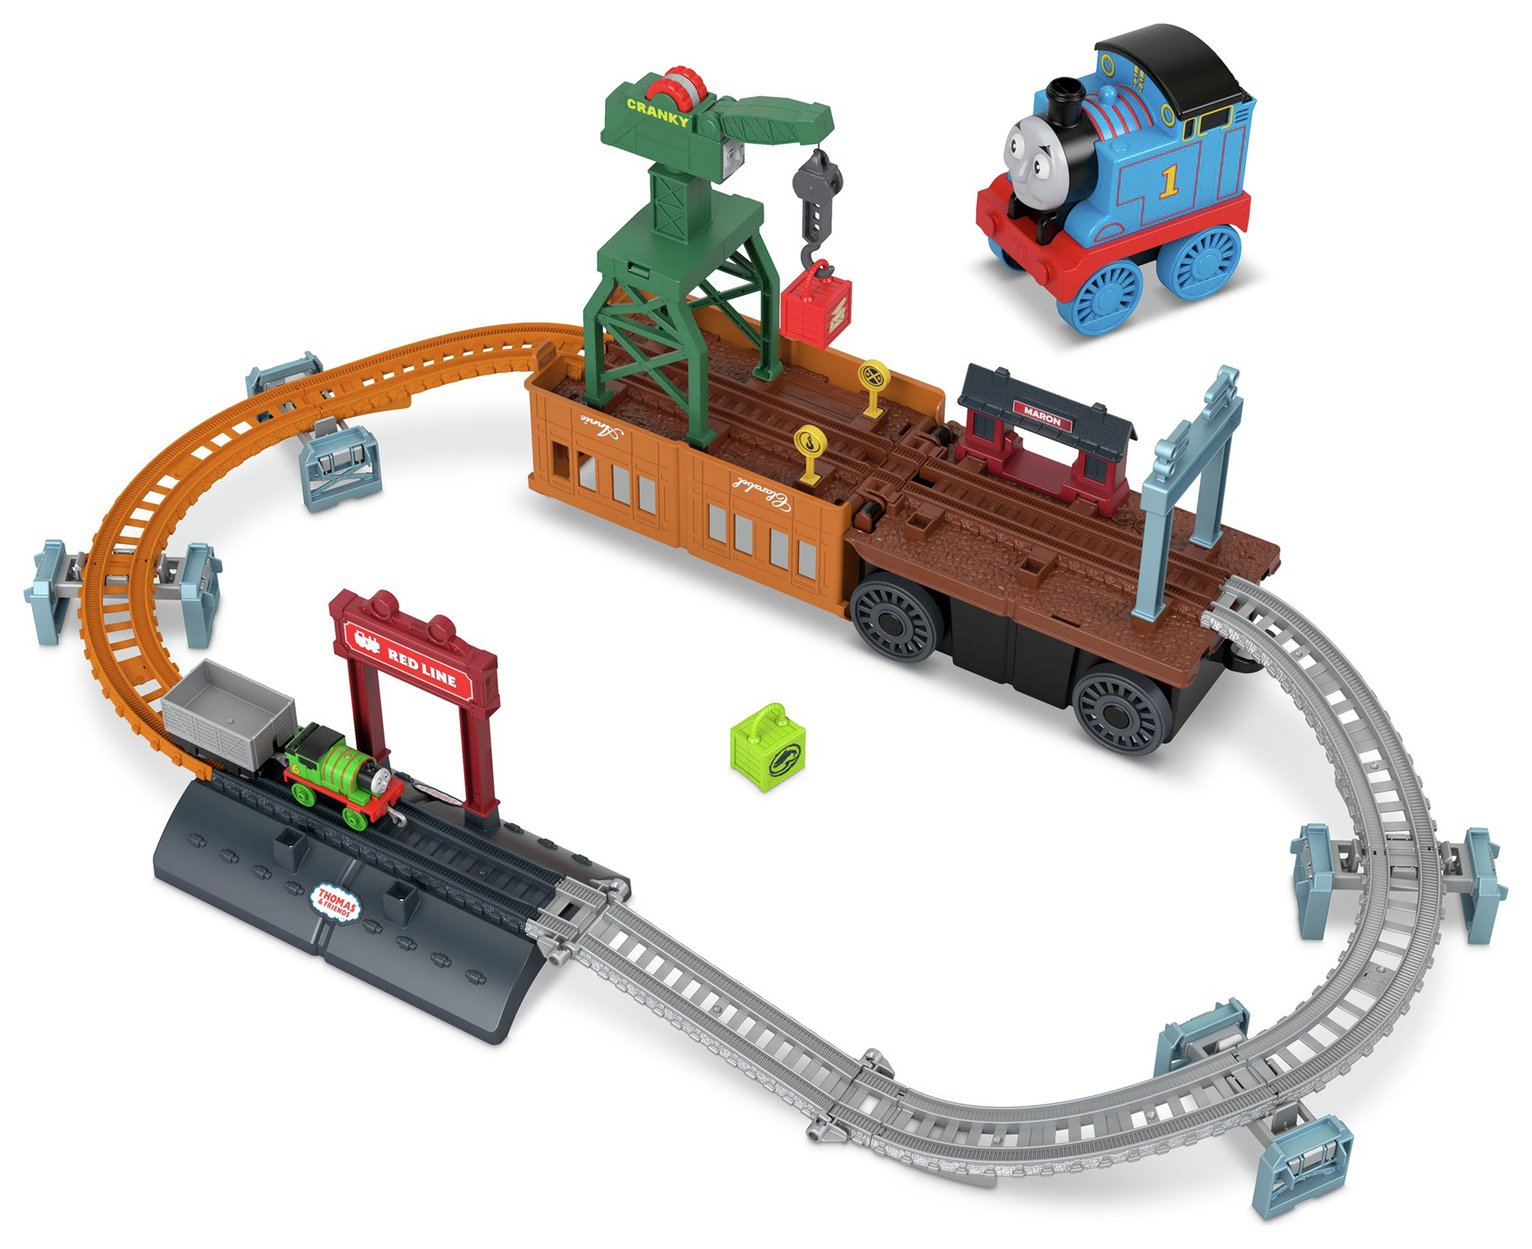 Thomas & Friends 2-in-1 Transforming Thomas Playset review